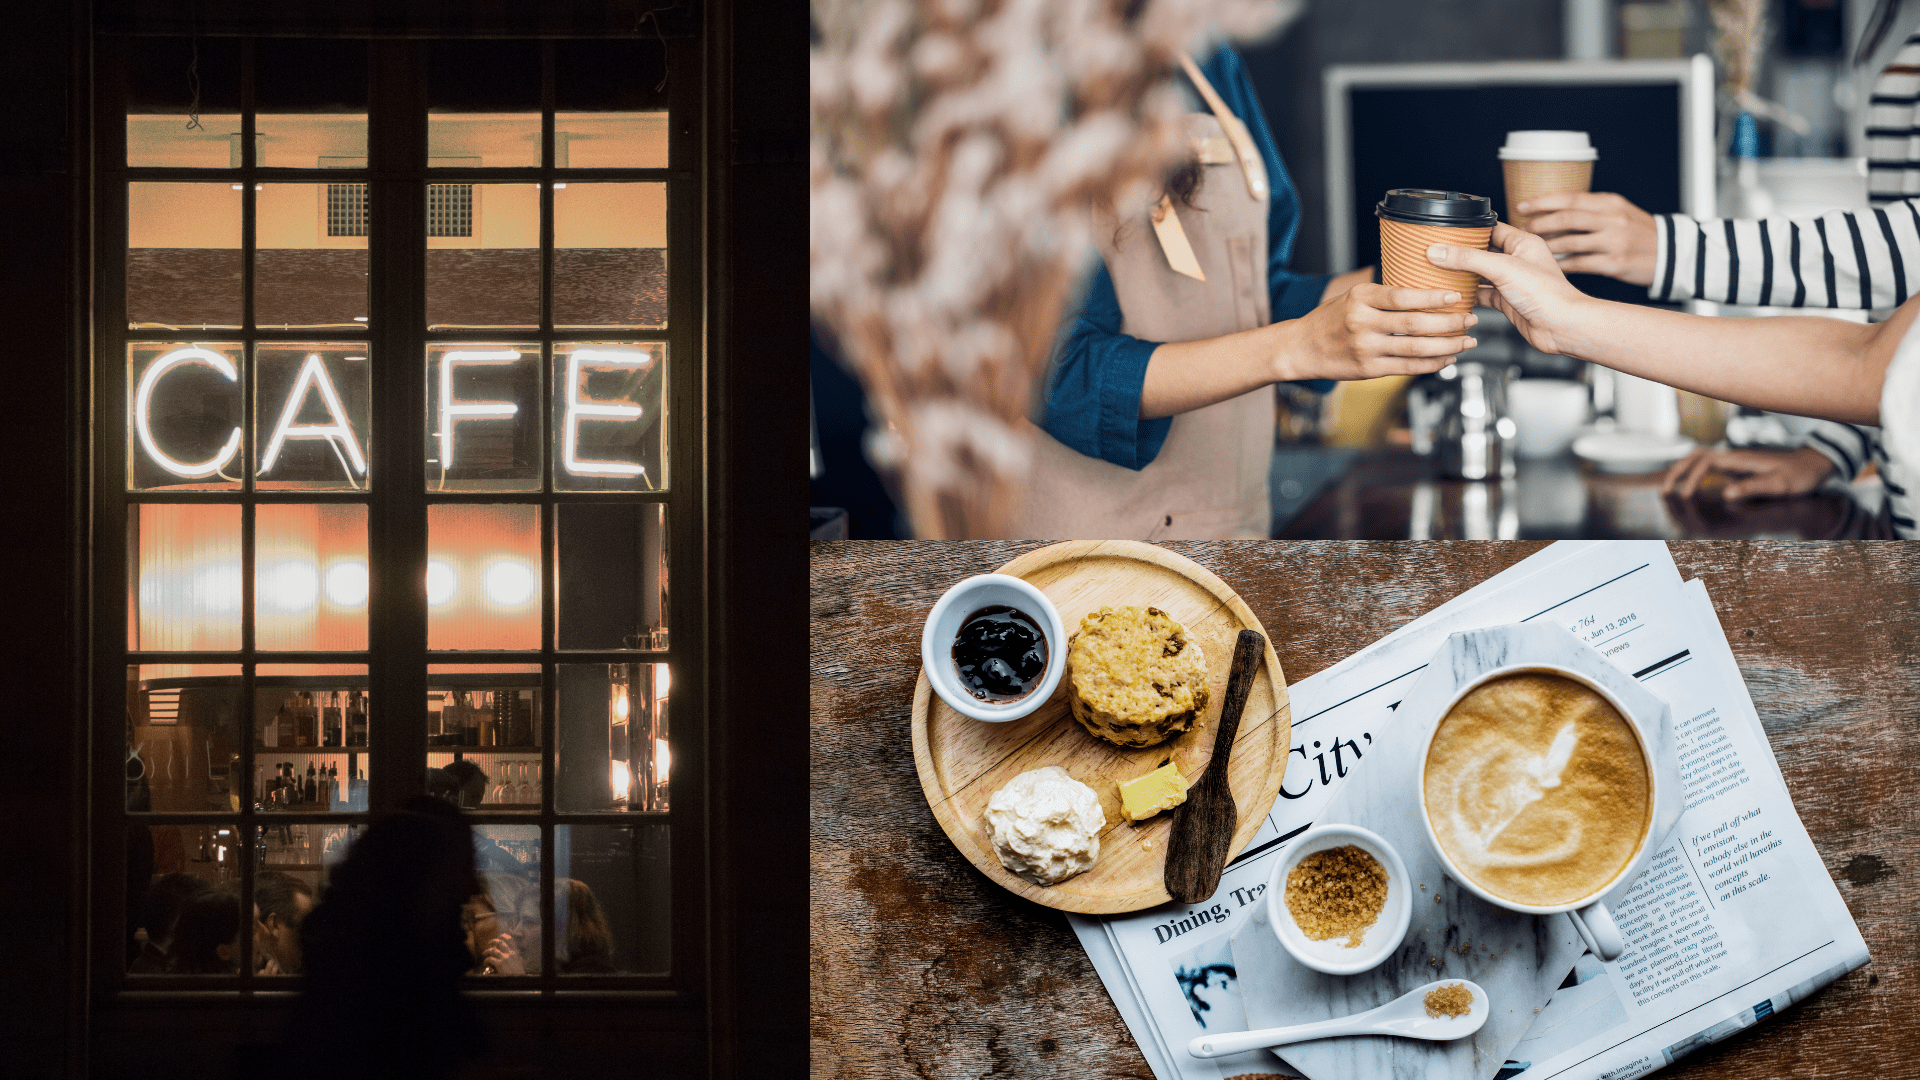 Tumblr  Coffee time, Coffee love, Coffee cafe